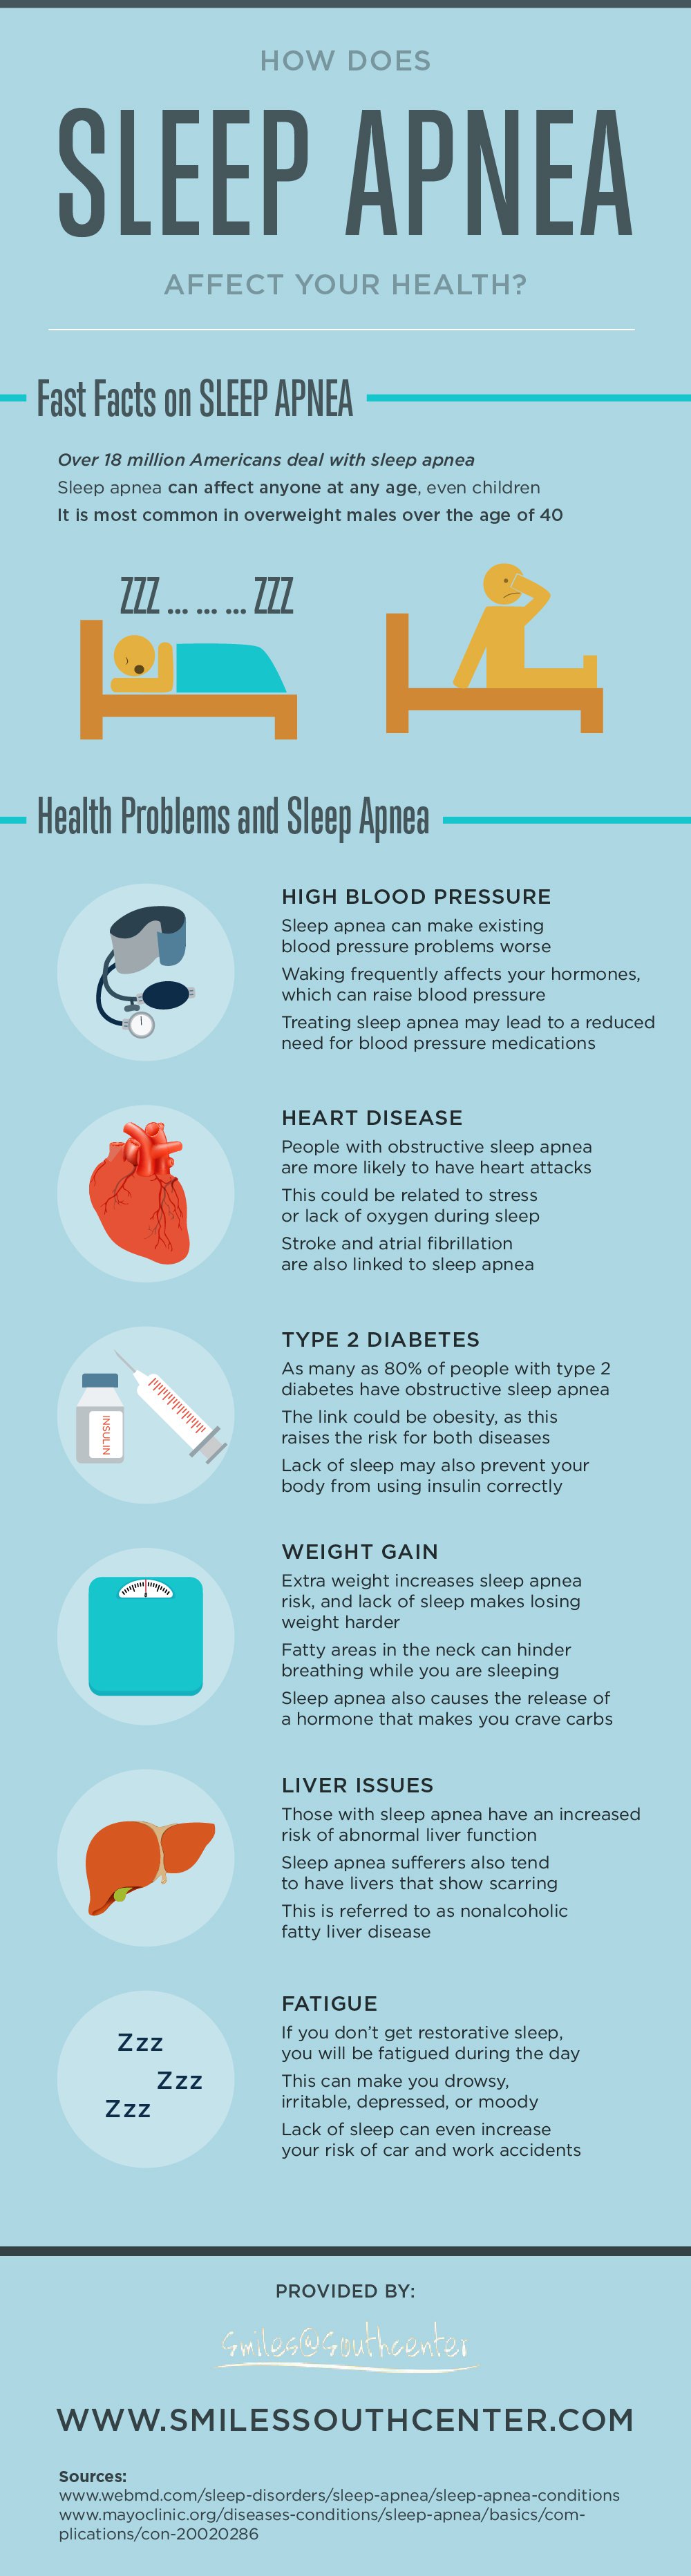 How Does Sleep Apnea Affect Your Health? [Infographic]